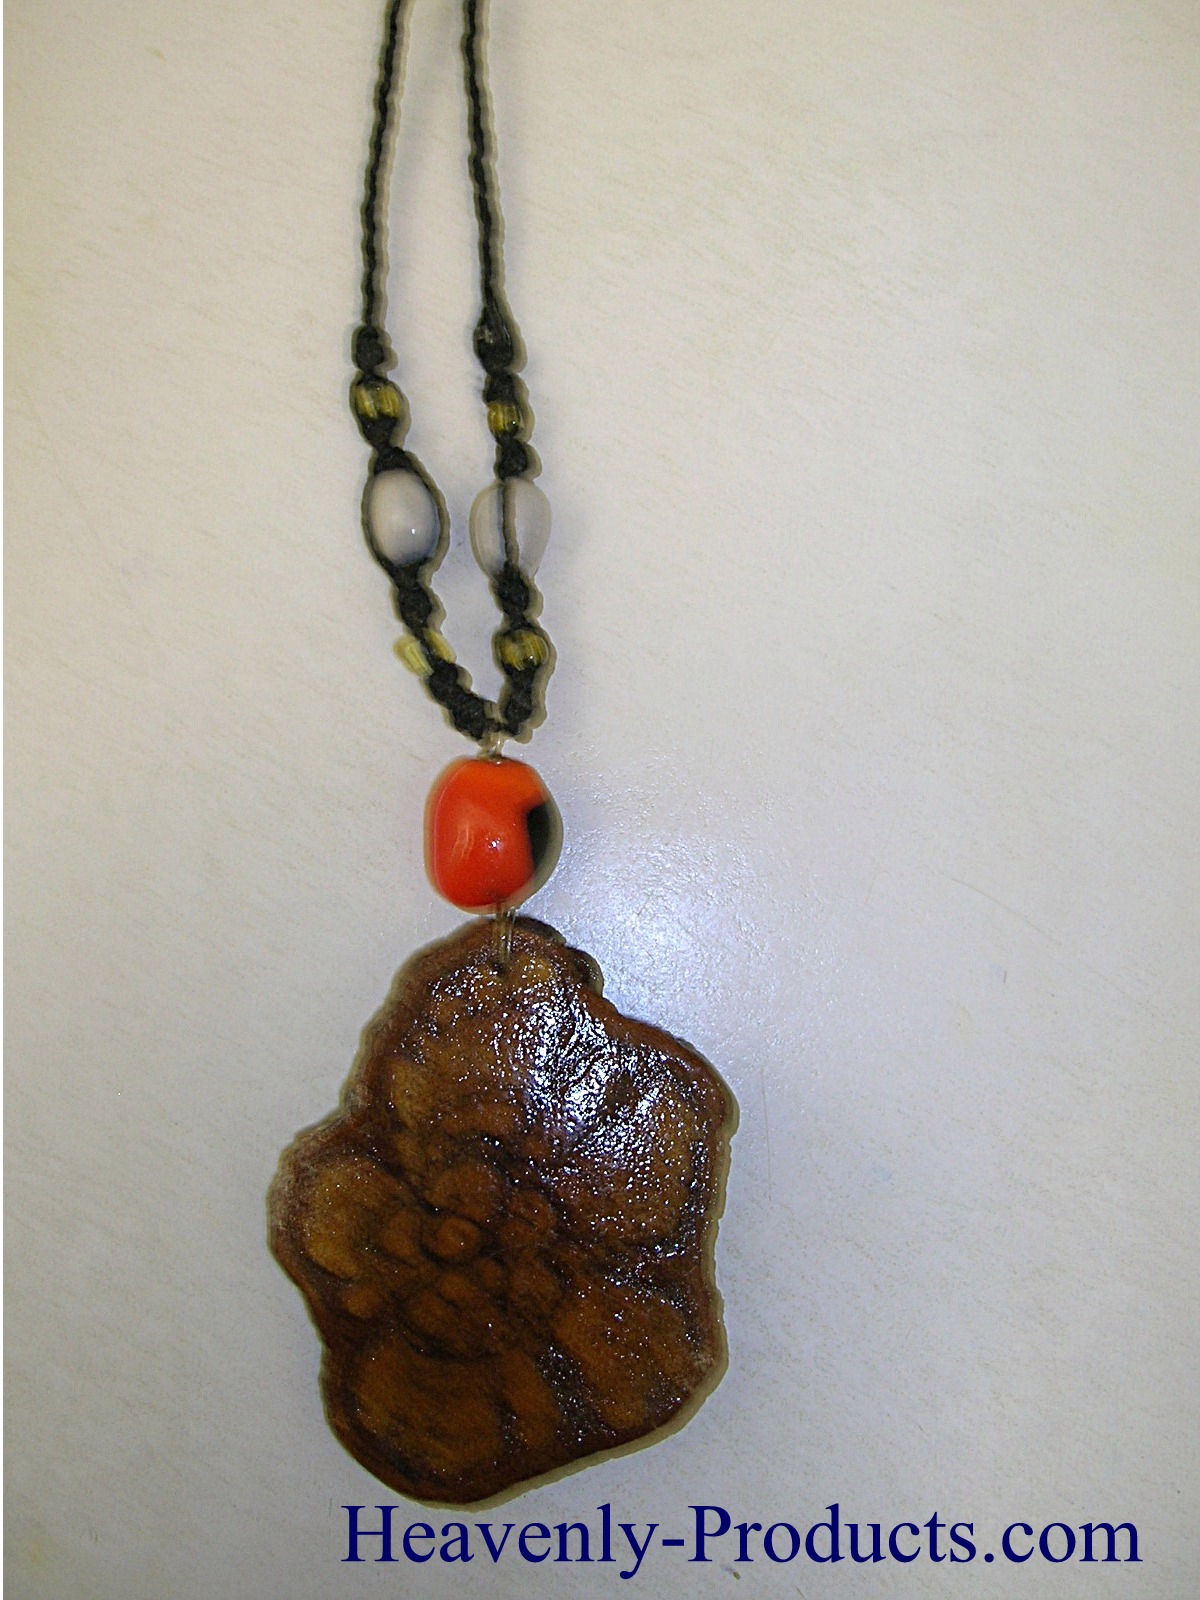 Black Banisteriopsis caapi Pendant Necklace #BK-09- SOLD